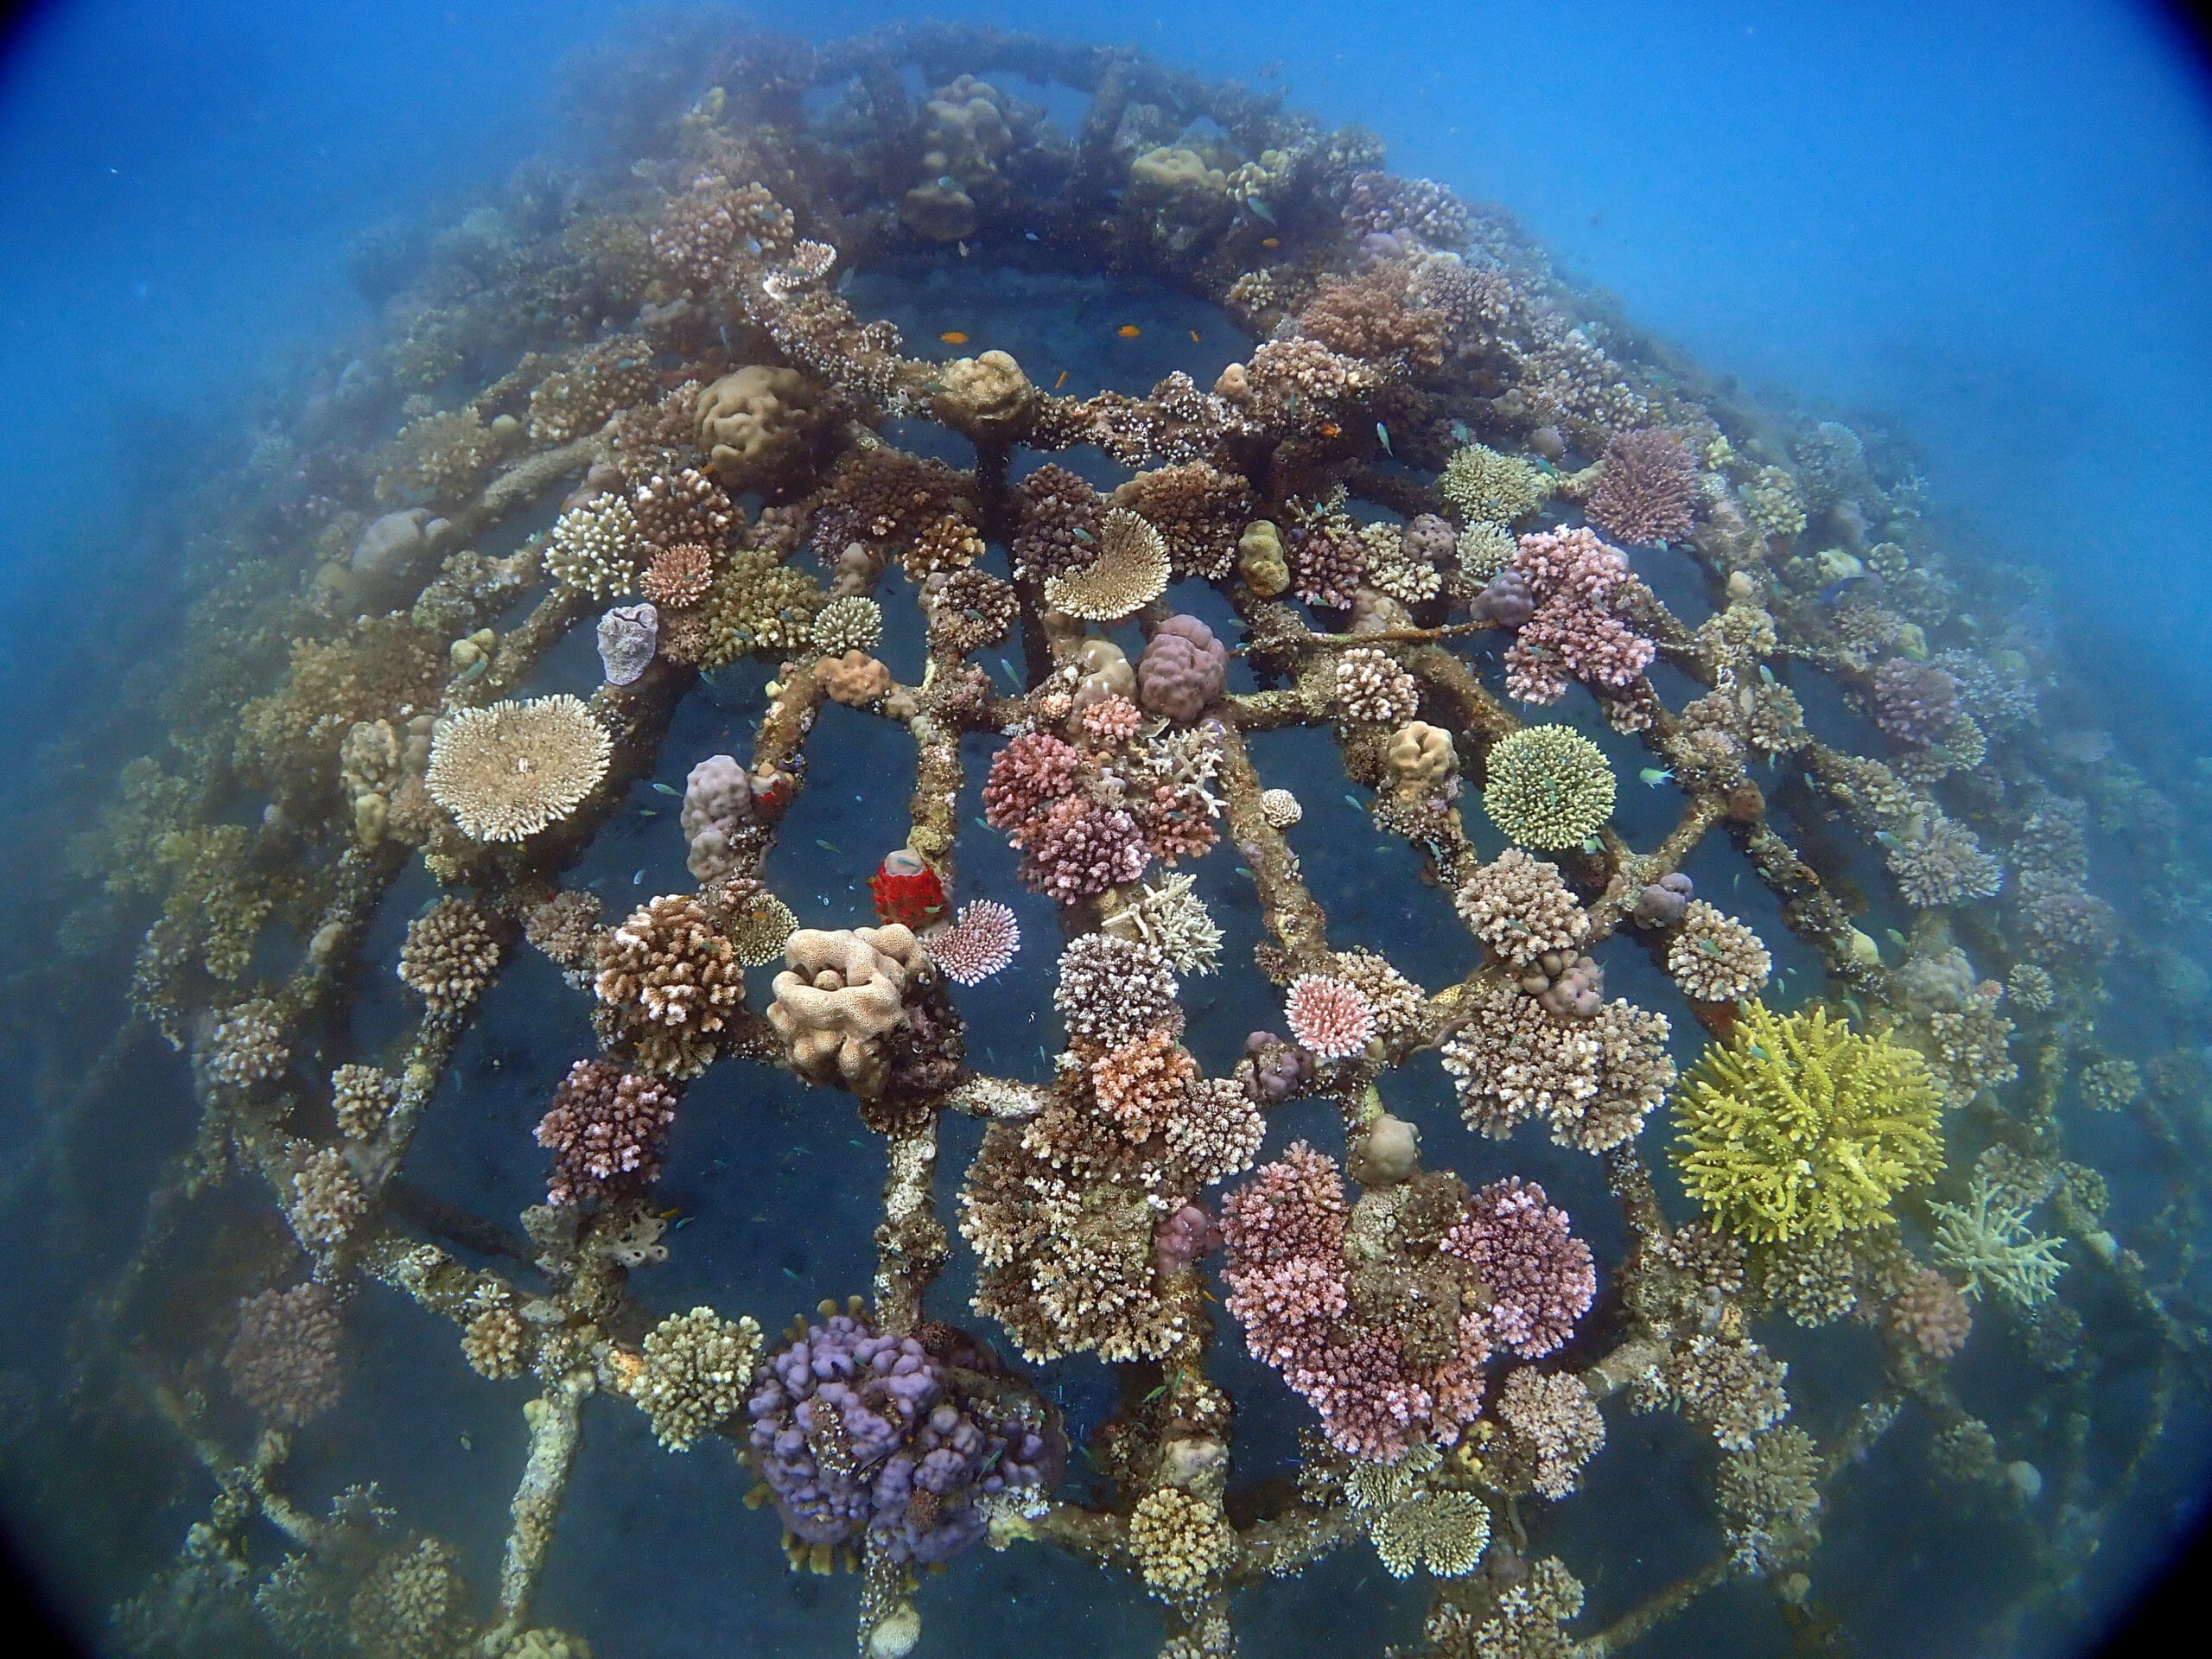 Pemuteran, Bali, Indonesian, Biorock, coral restoration, project, Global Coral Reef Alliance